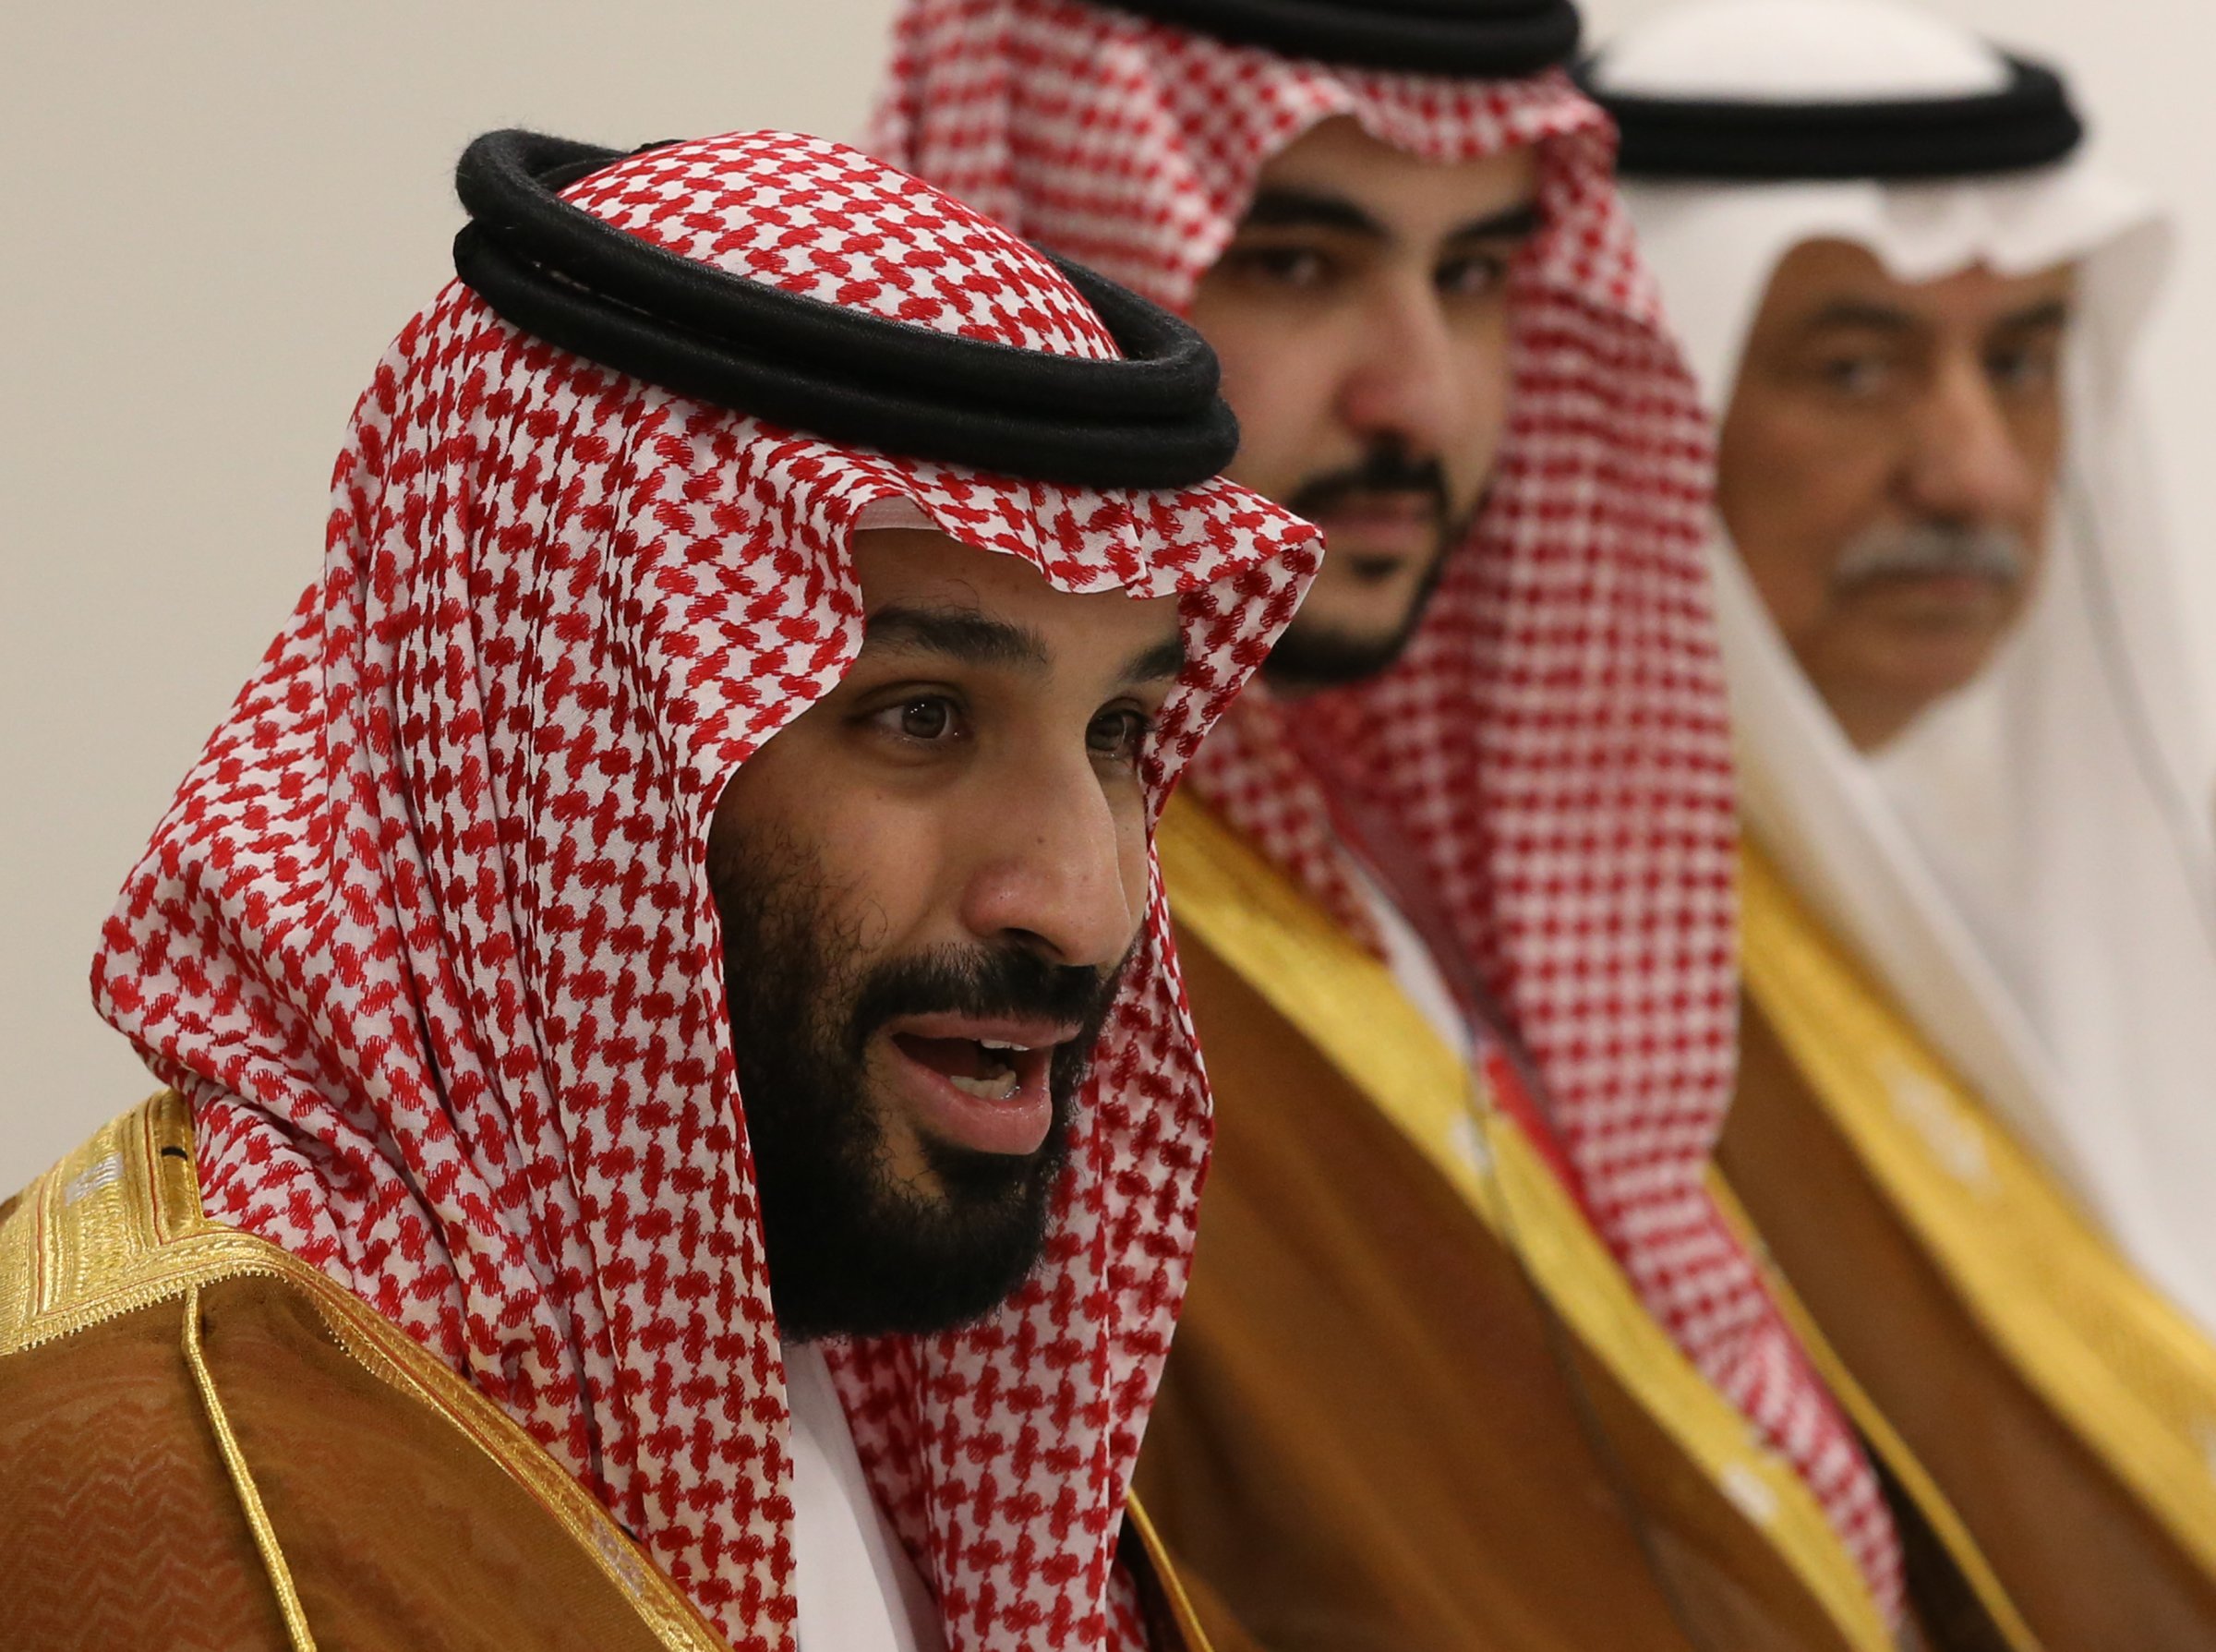 New Senate bill proposes visa restrictions for Saudi royals